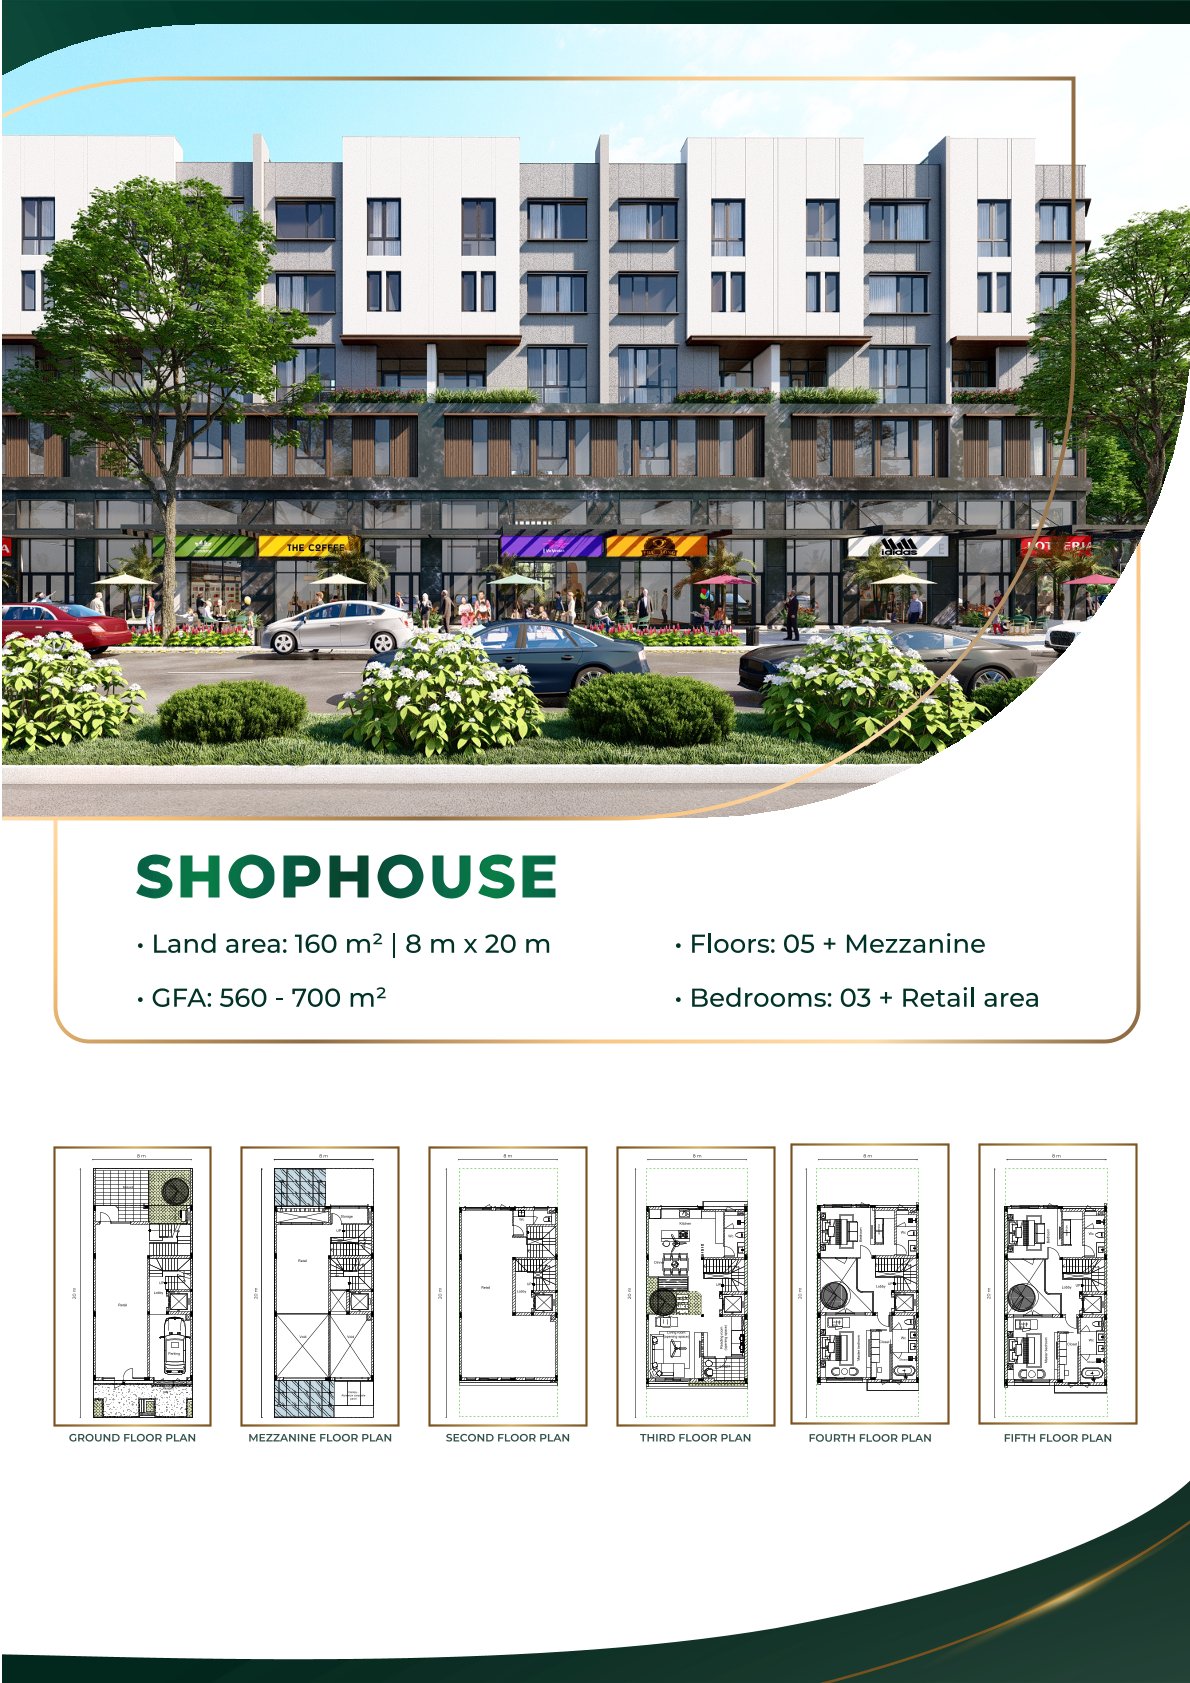 Shophouse Lotte Nhà Bè